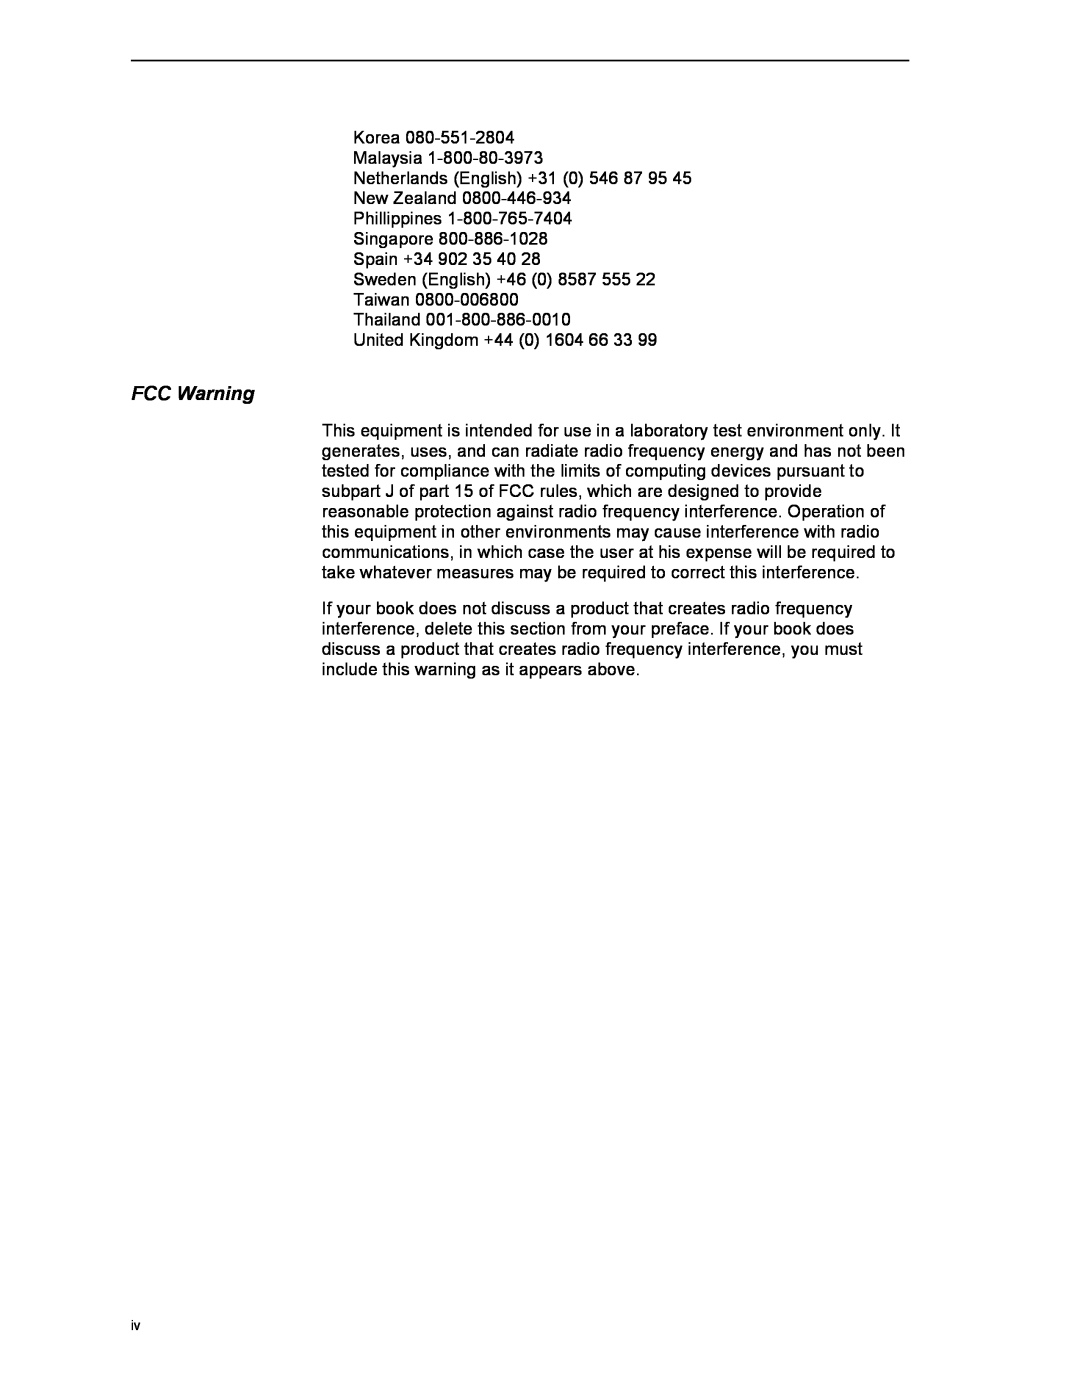 Texas Instruments HPL-D SLLU064A manual FCC Warning 